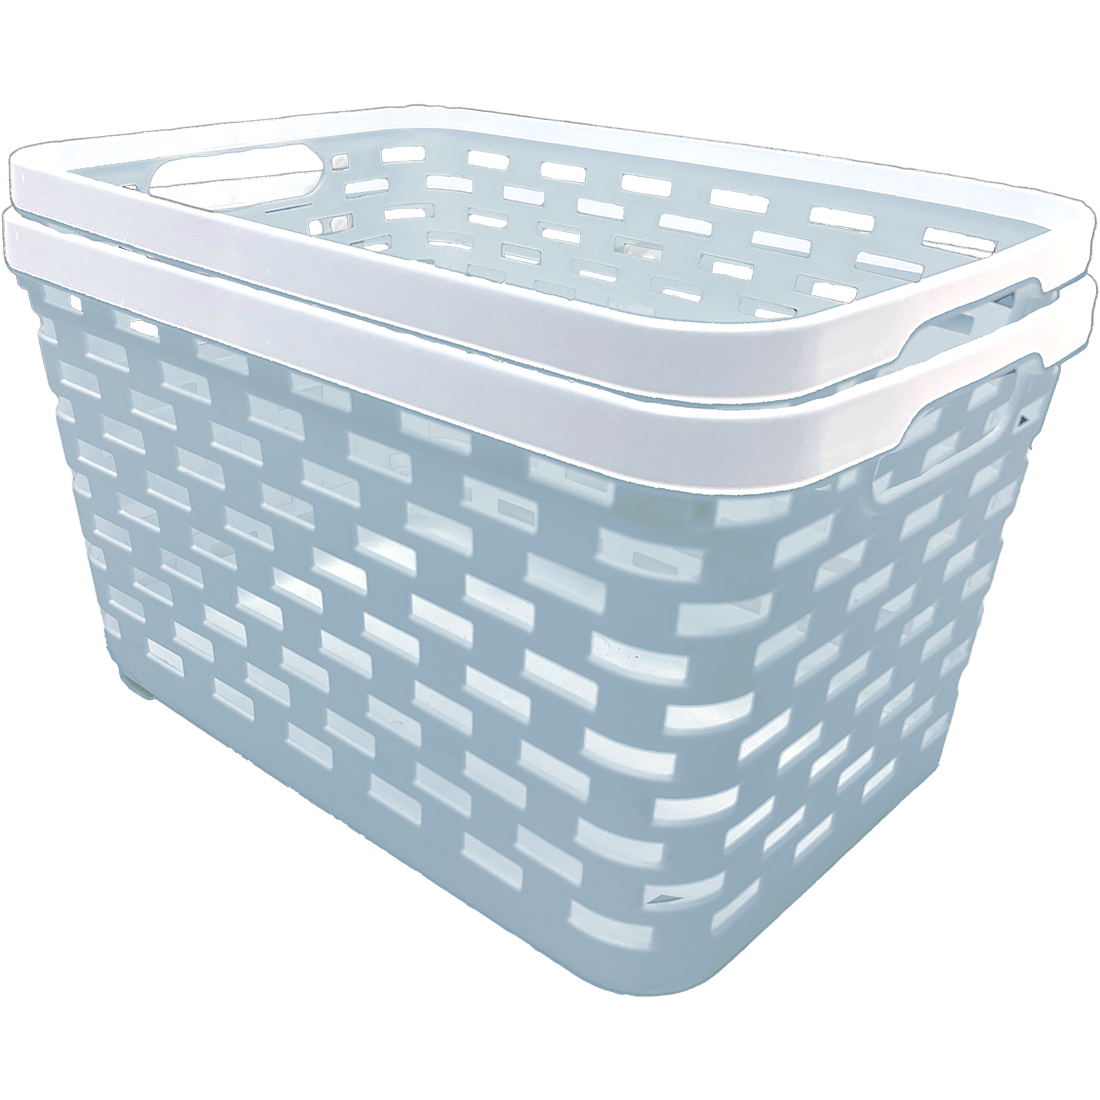 2 Pack Woven Plastic Storage Basket - Sky Blue & White